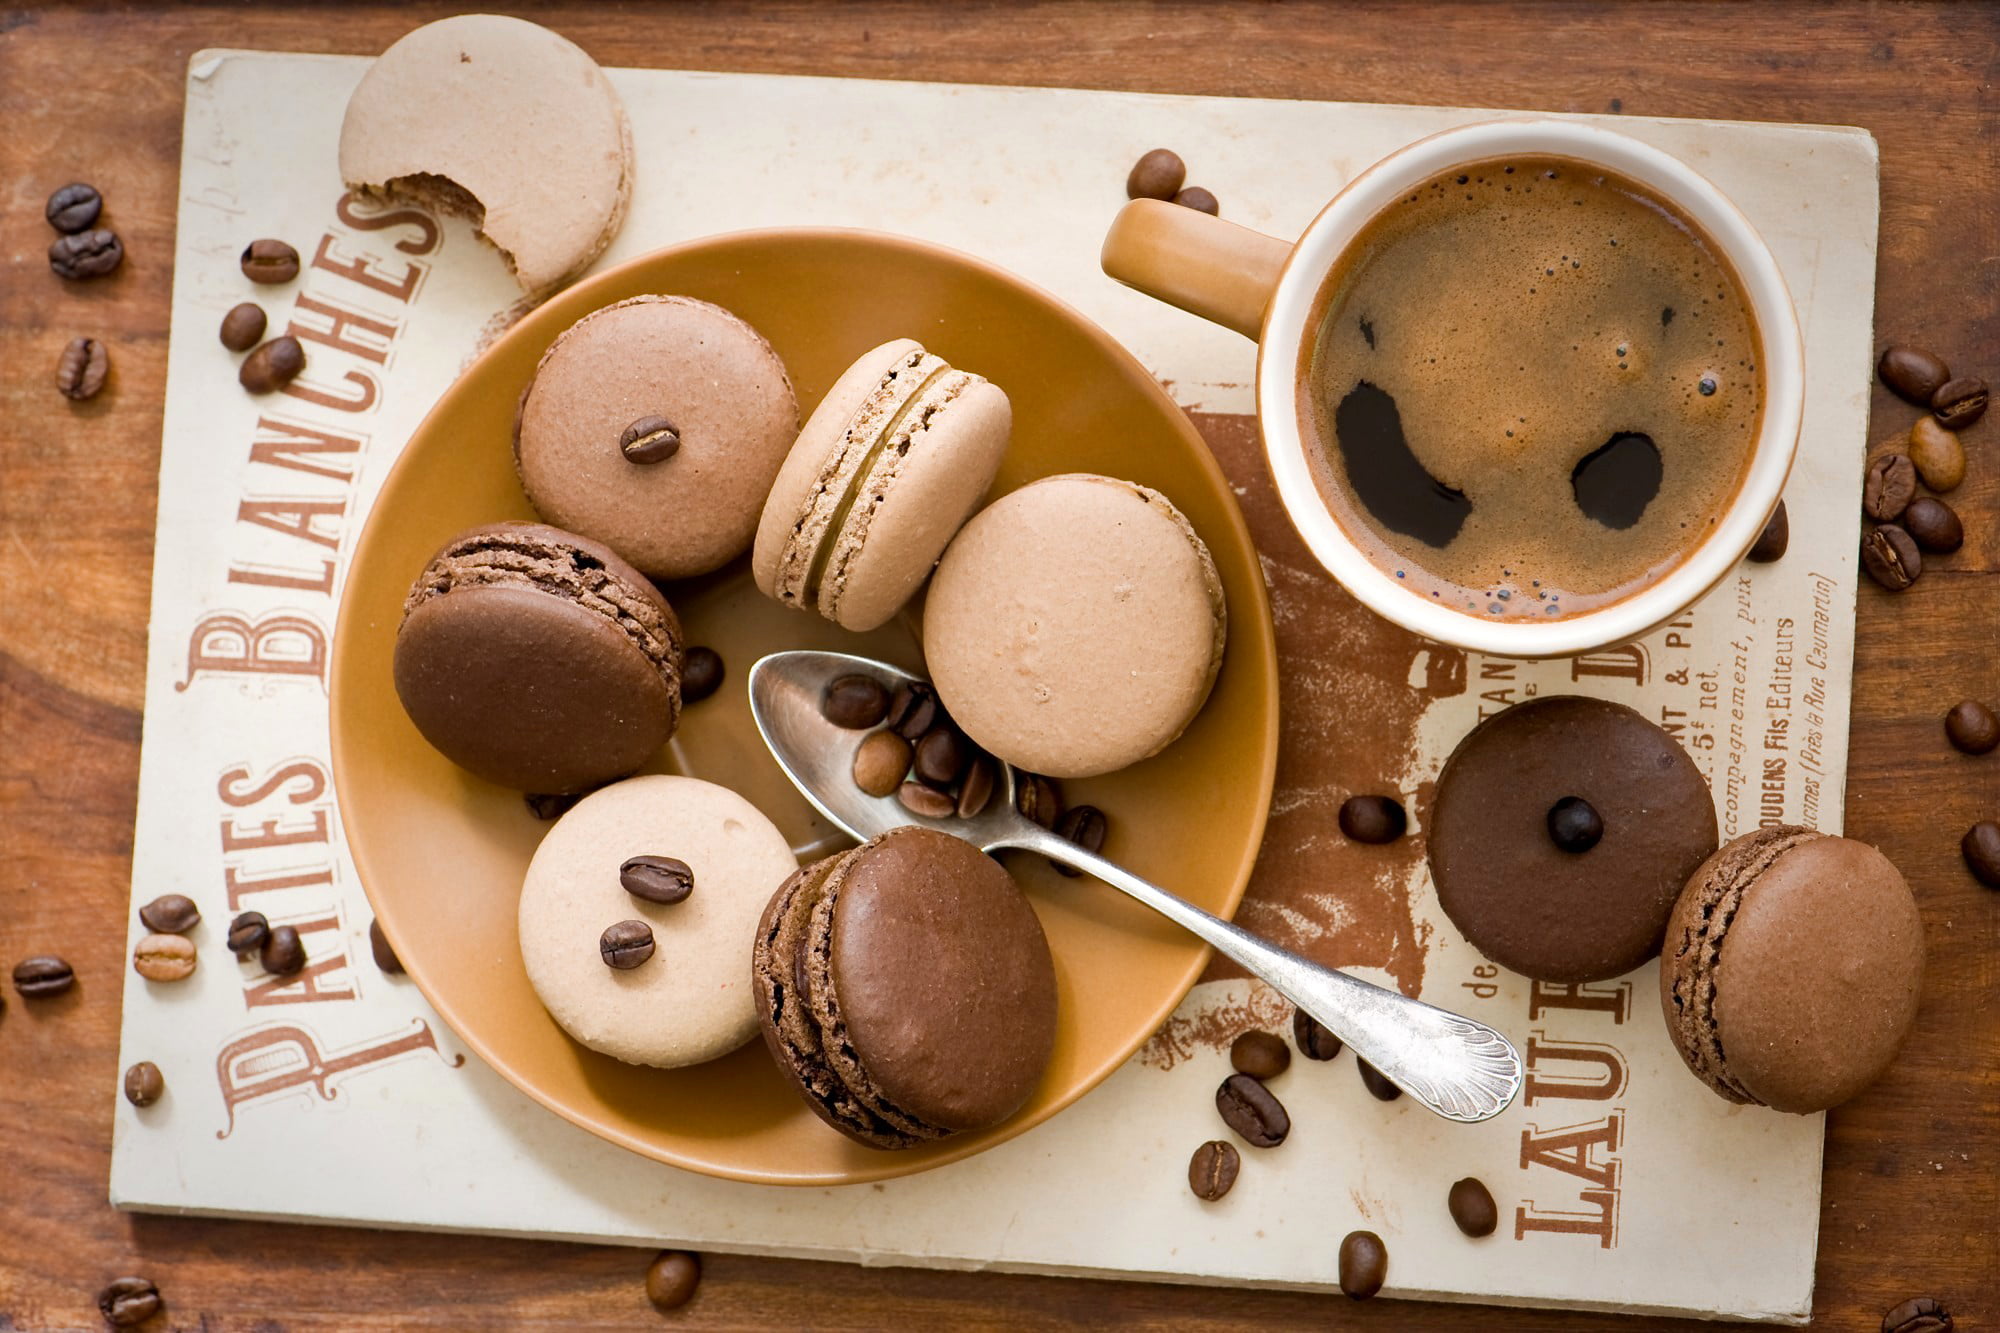 round macarons, coffee, grain, cookies, plate, spoon, Cup, sweets